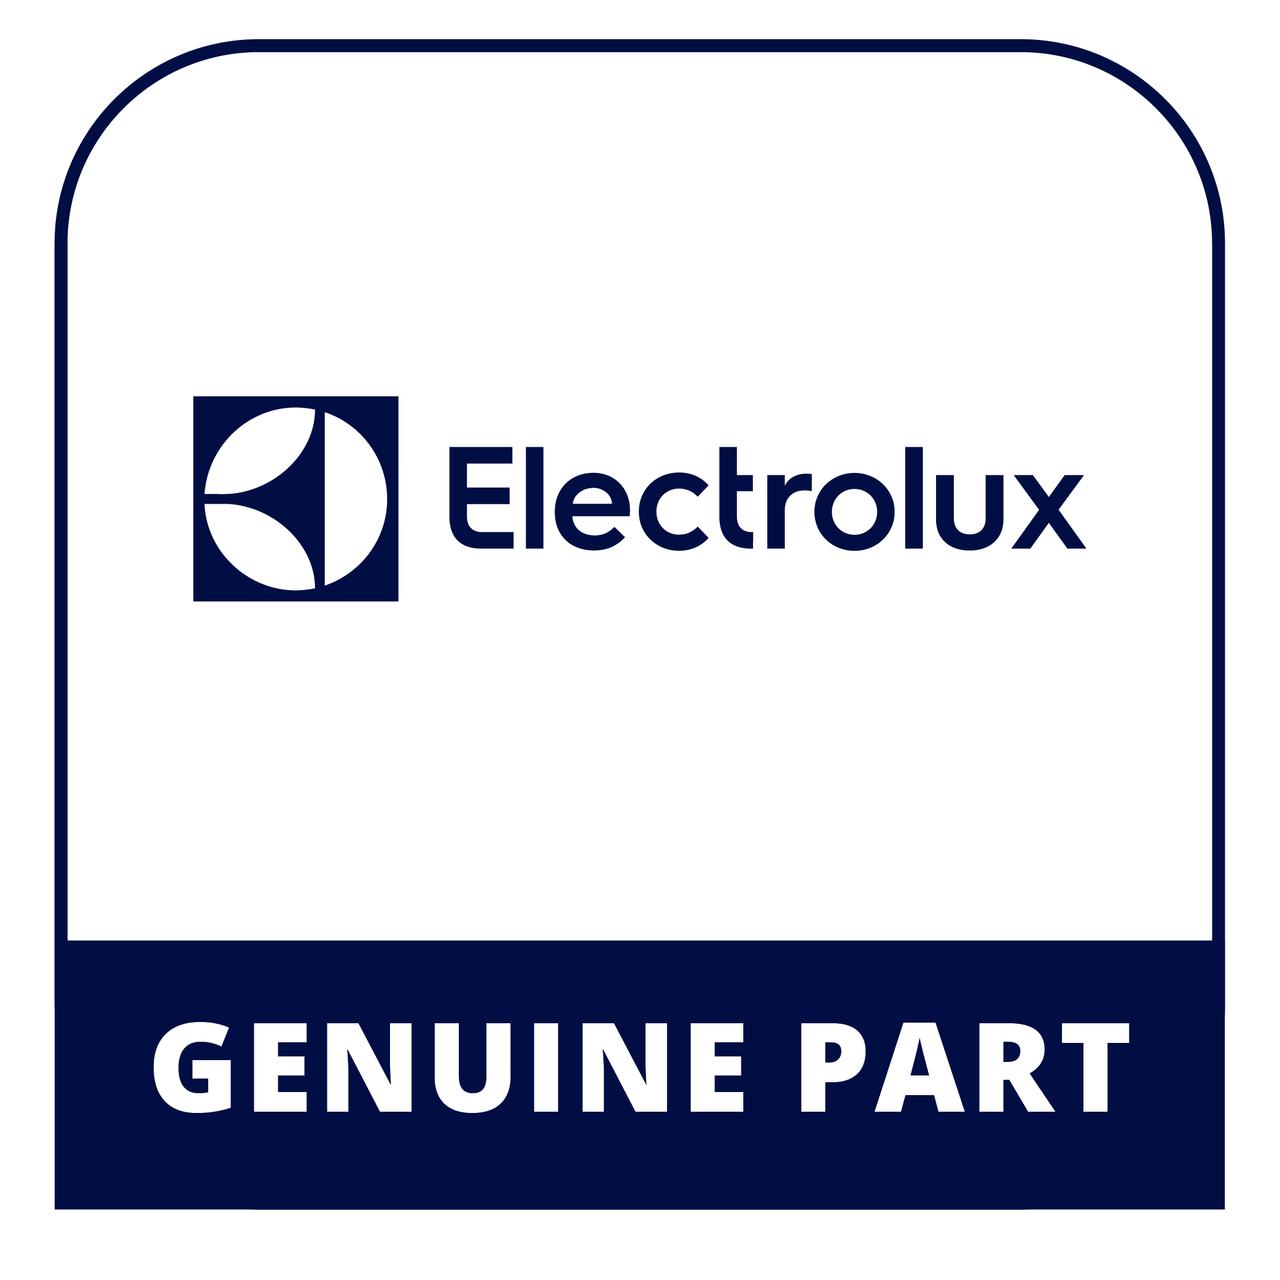 Frigidaire - Electrolux 316220009 - Knob - Genuine Electrolux Part